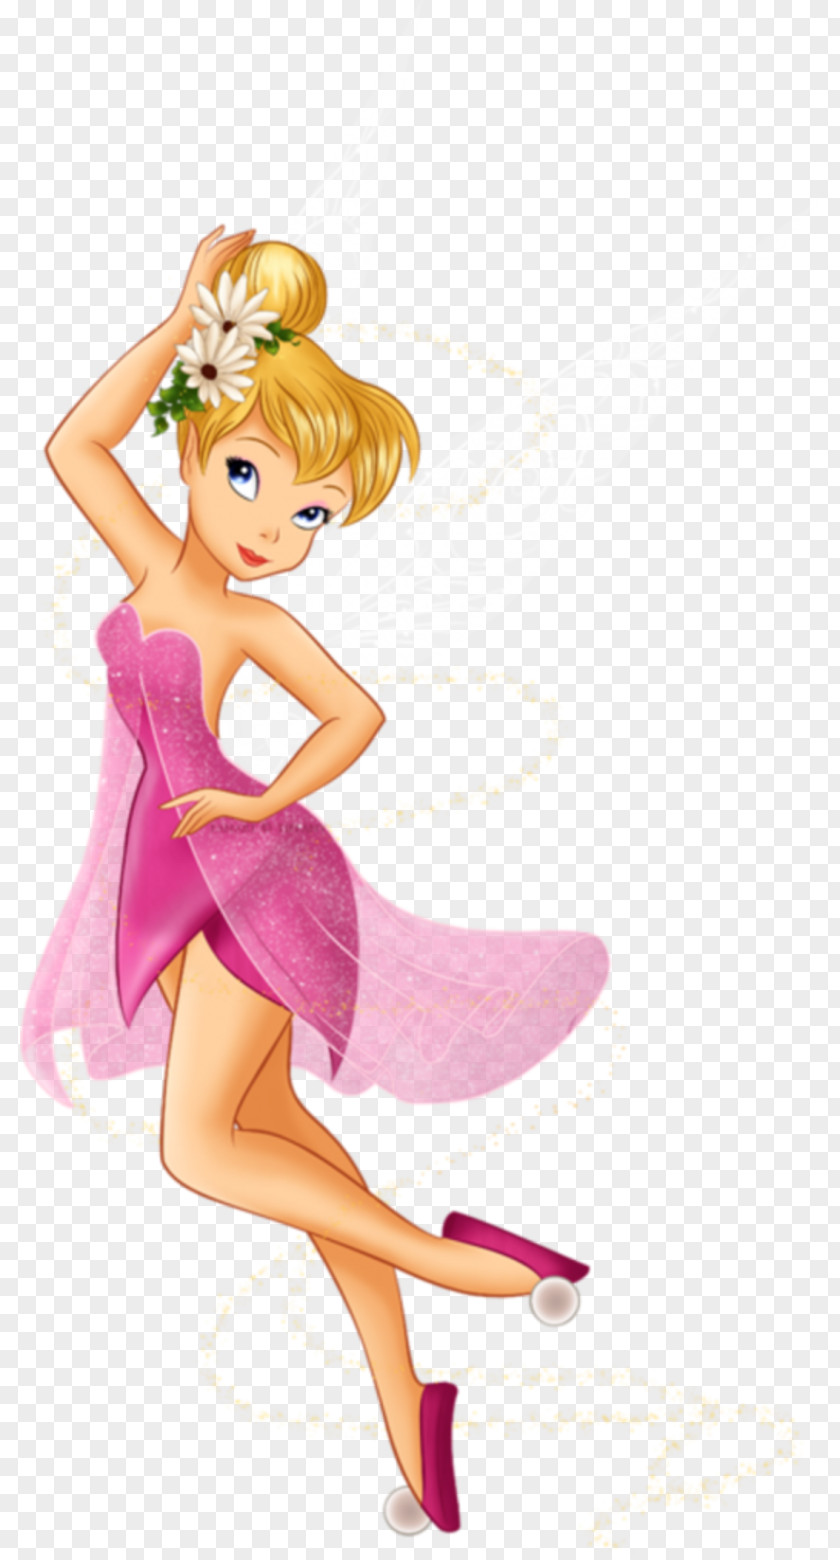 Cloche Tinker Bell Disney Fairies Peter Pan Vidia Fairy PNG